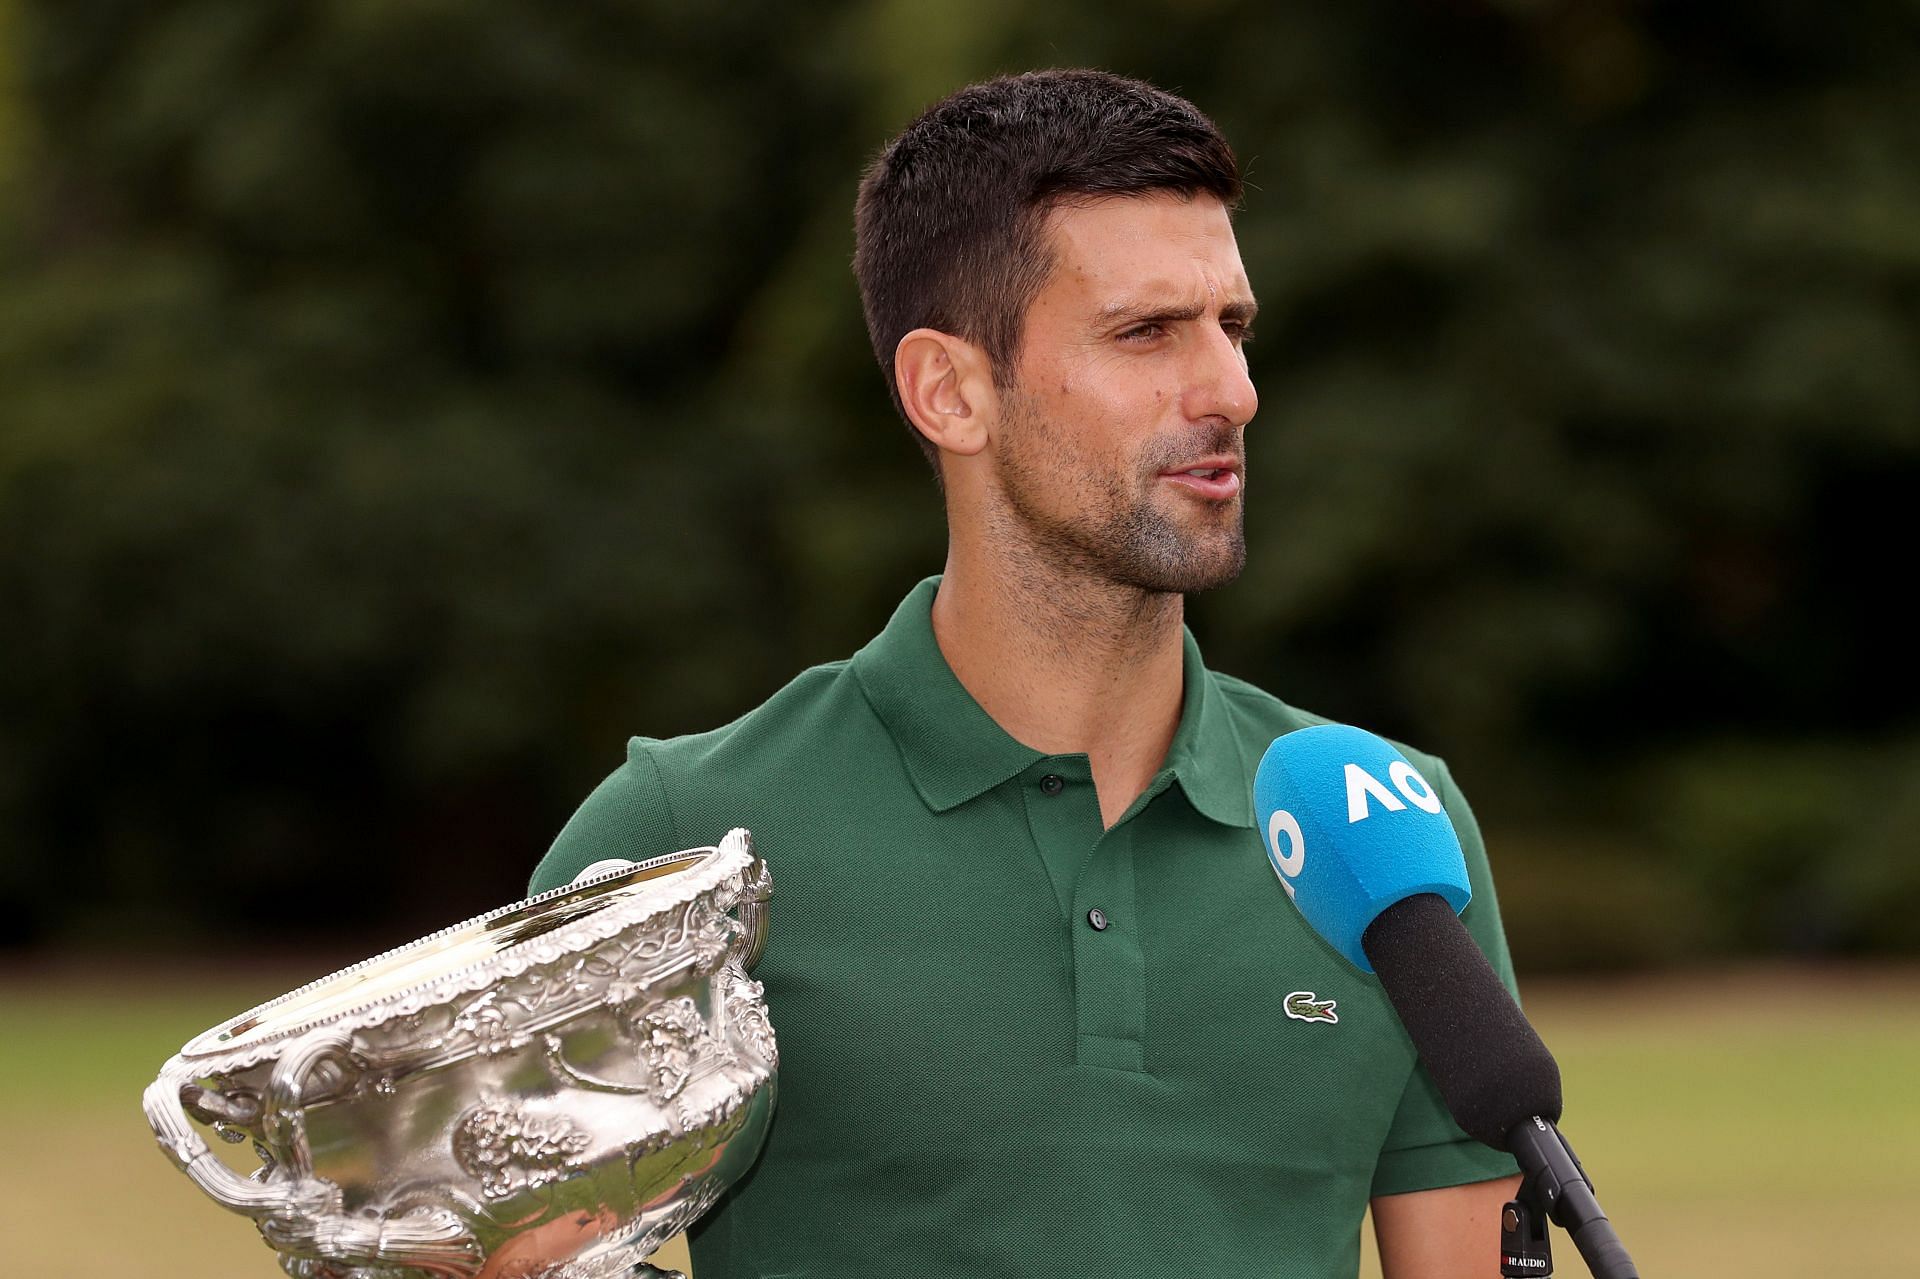 The Serbian tennis superstar regained the No. 1 ranking after winning the 2023 Australian Open.